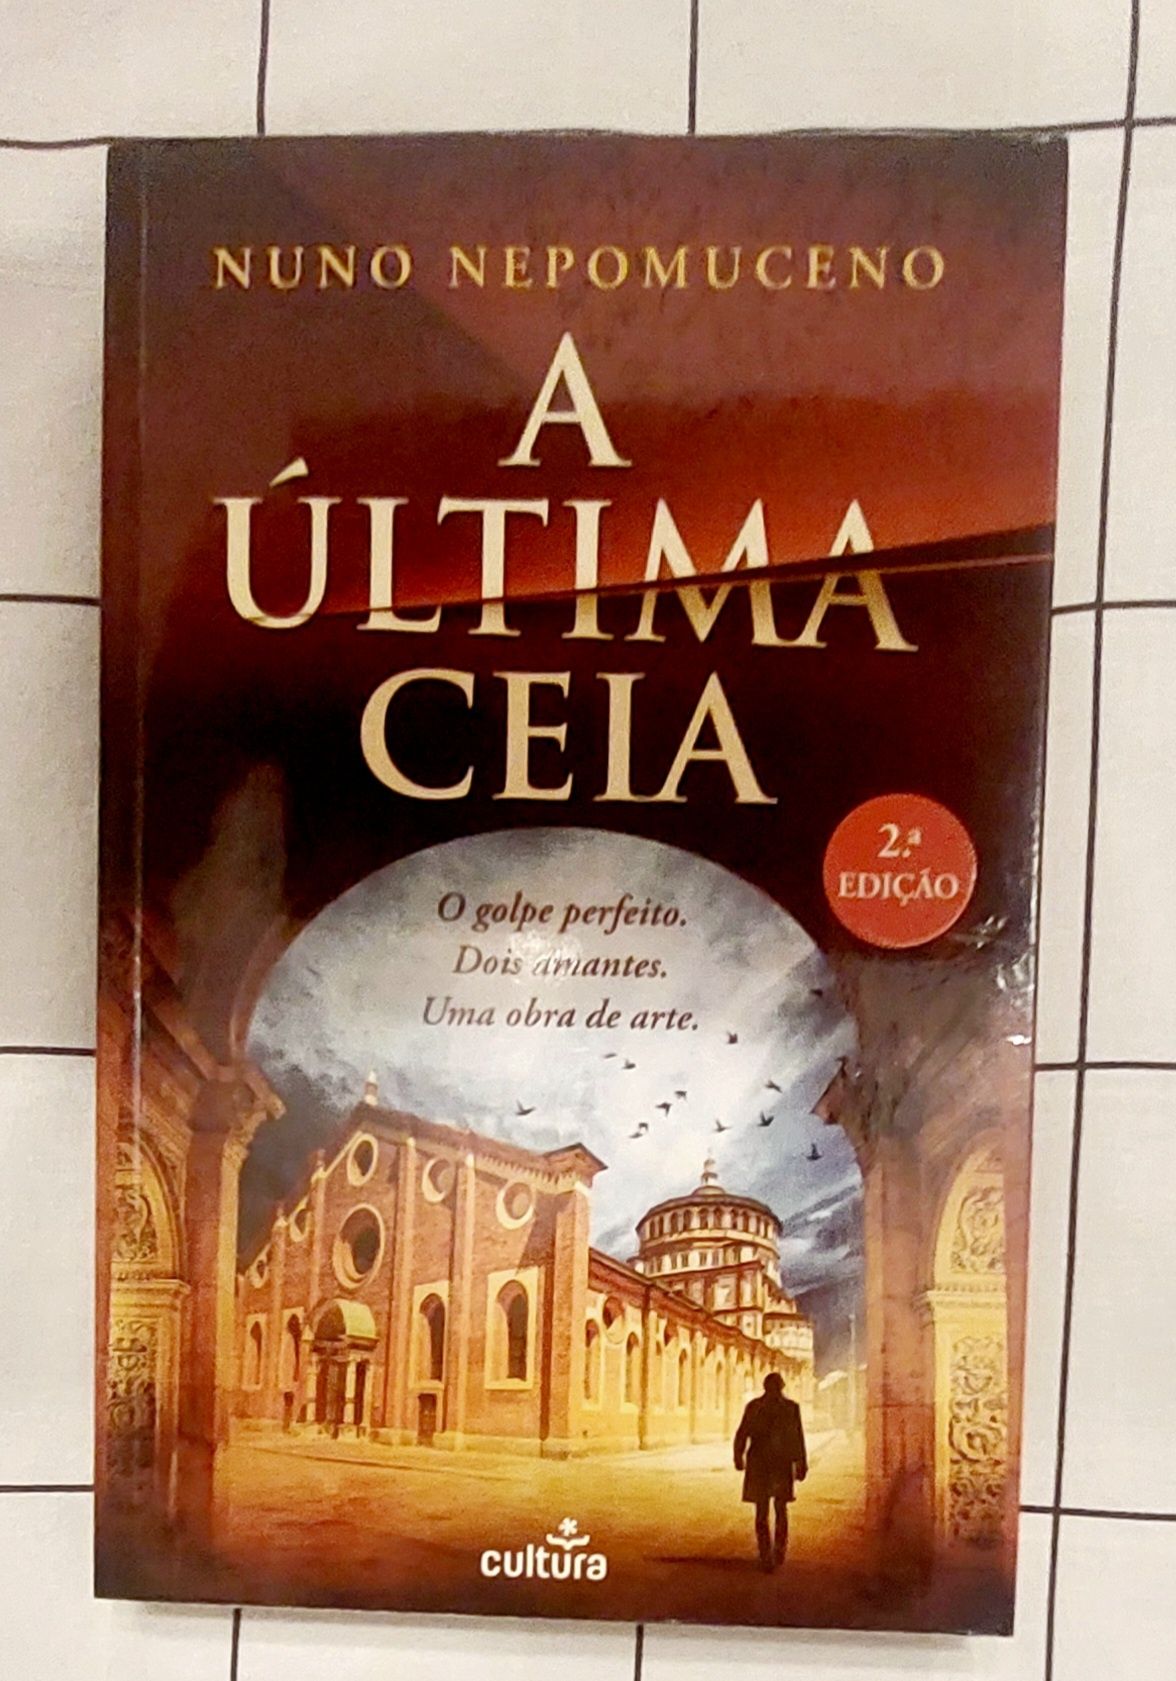 "A Última Ceia" de Nuno Nepomuceno